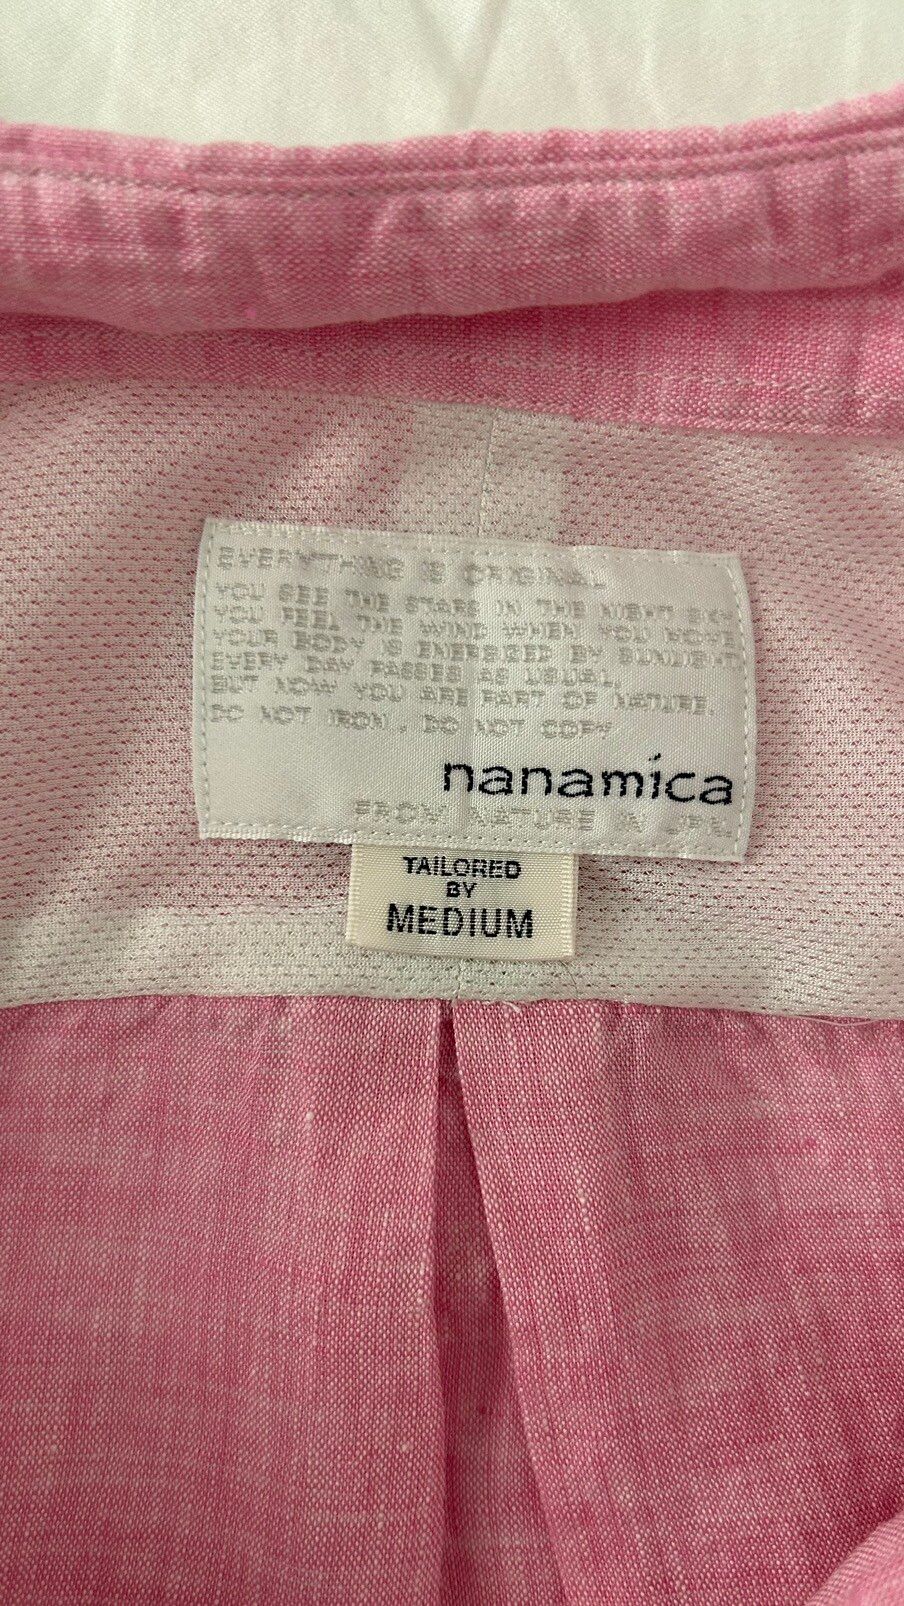 nanamica - 100% linen shirt - medium - made in japan - 6